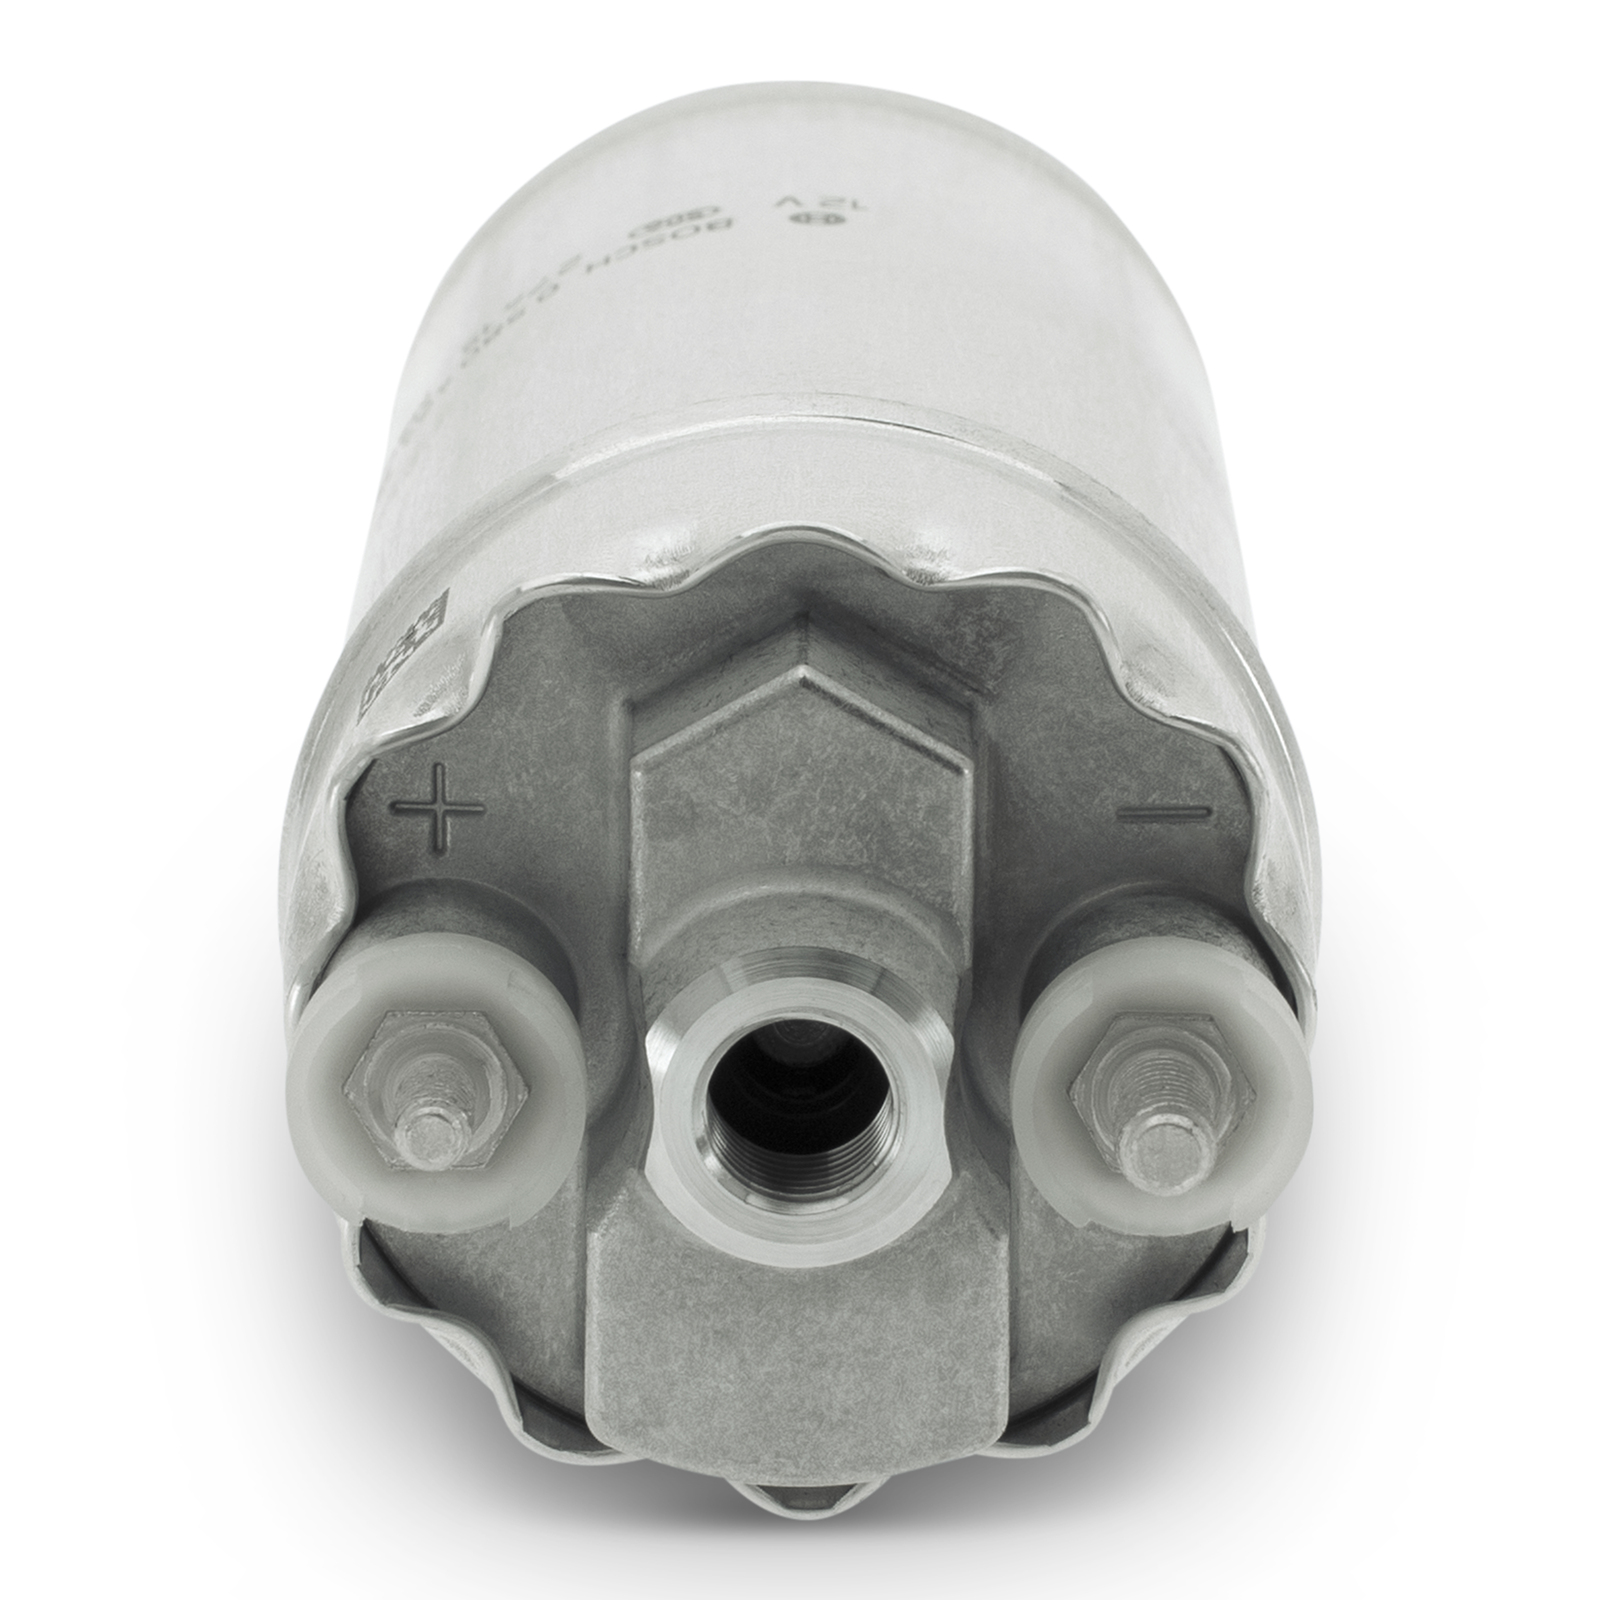 Bosch 0580464200 External High Flow In-Line Fuel Pump – Replaces